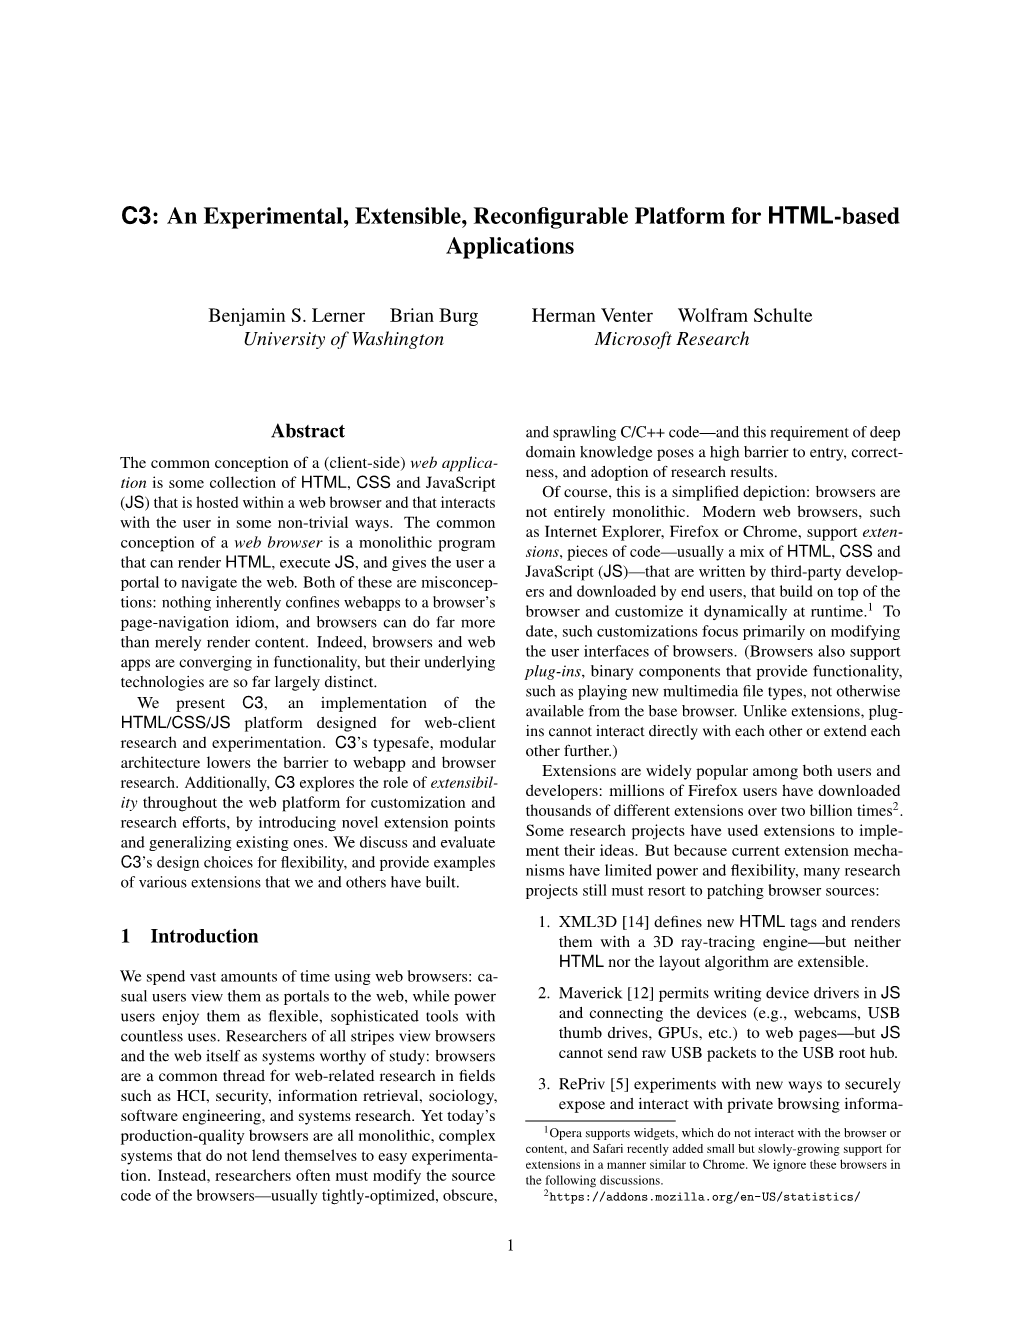 C3: an Experimental, Extensible, Reconfigurable Platform for HTML